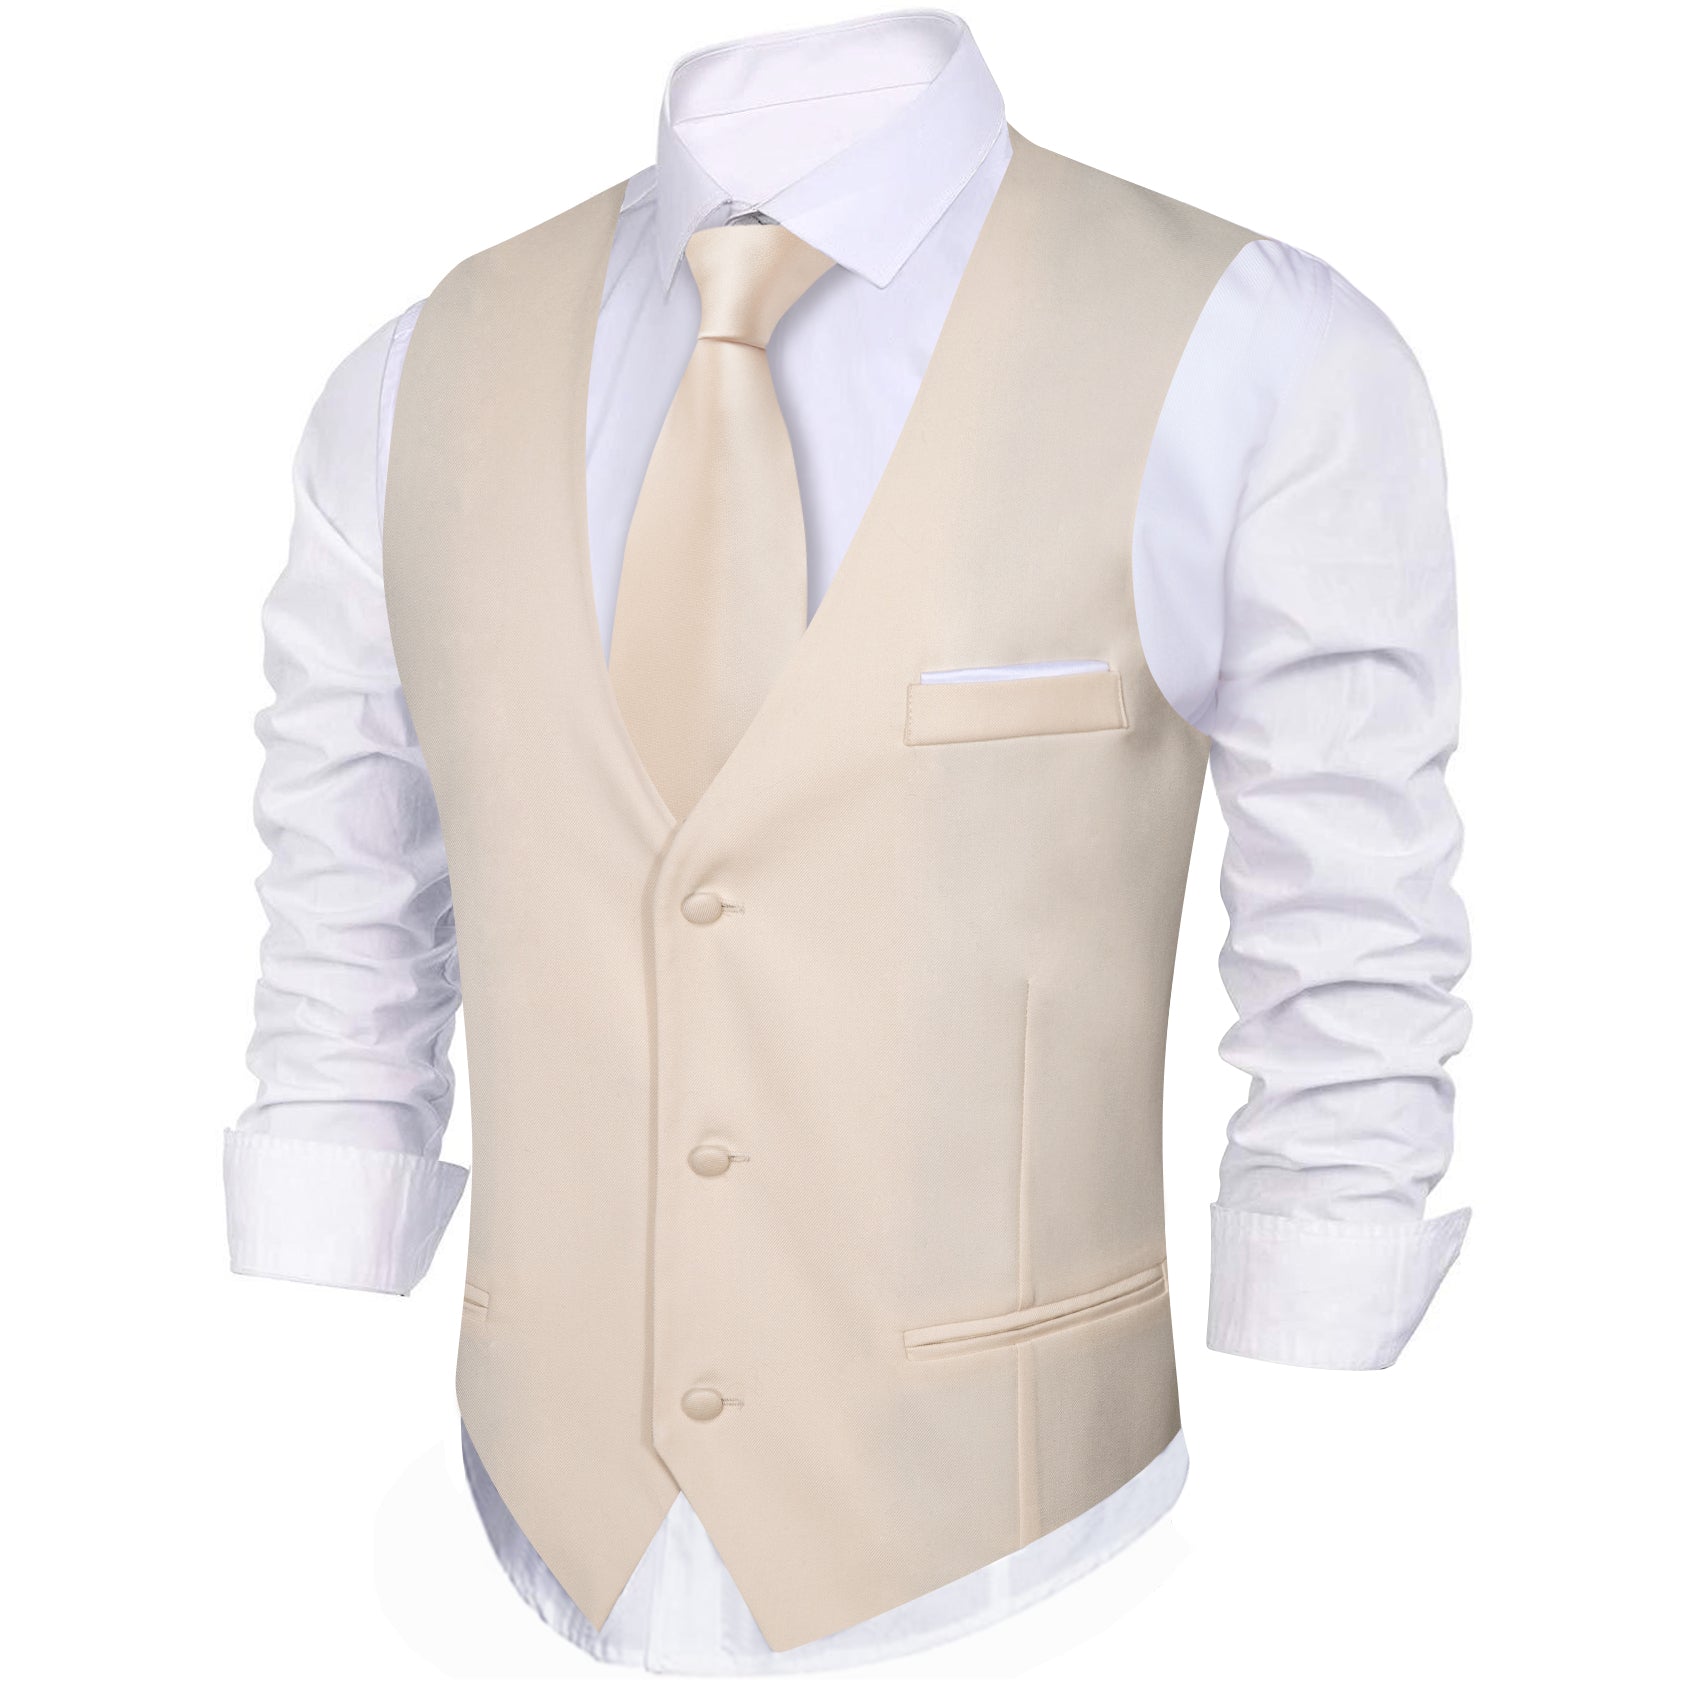 Cornsilk Solid V-Neck Waistcoat Vest for Business